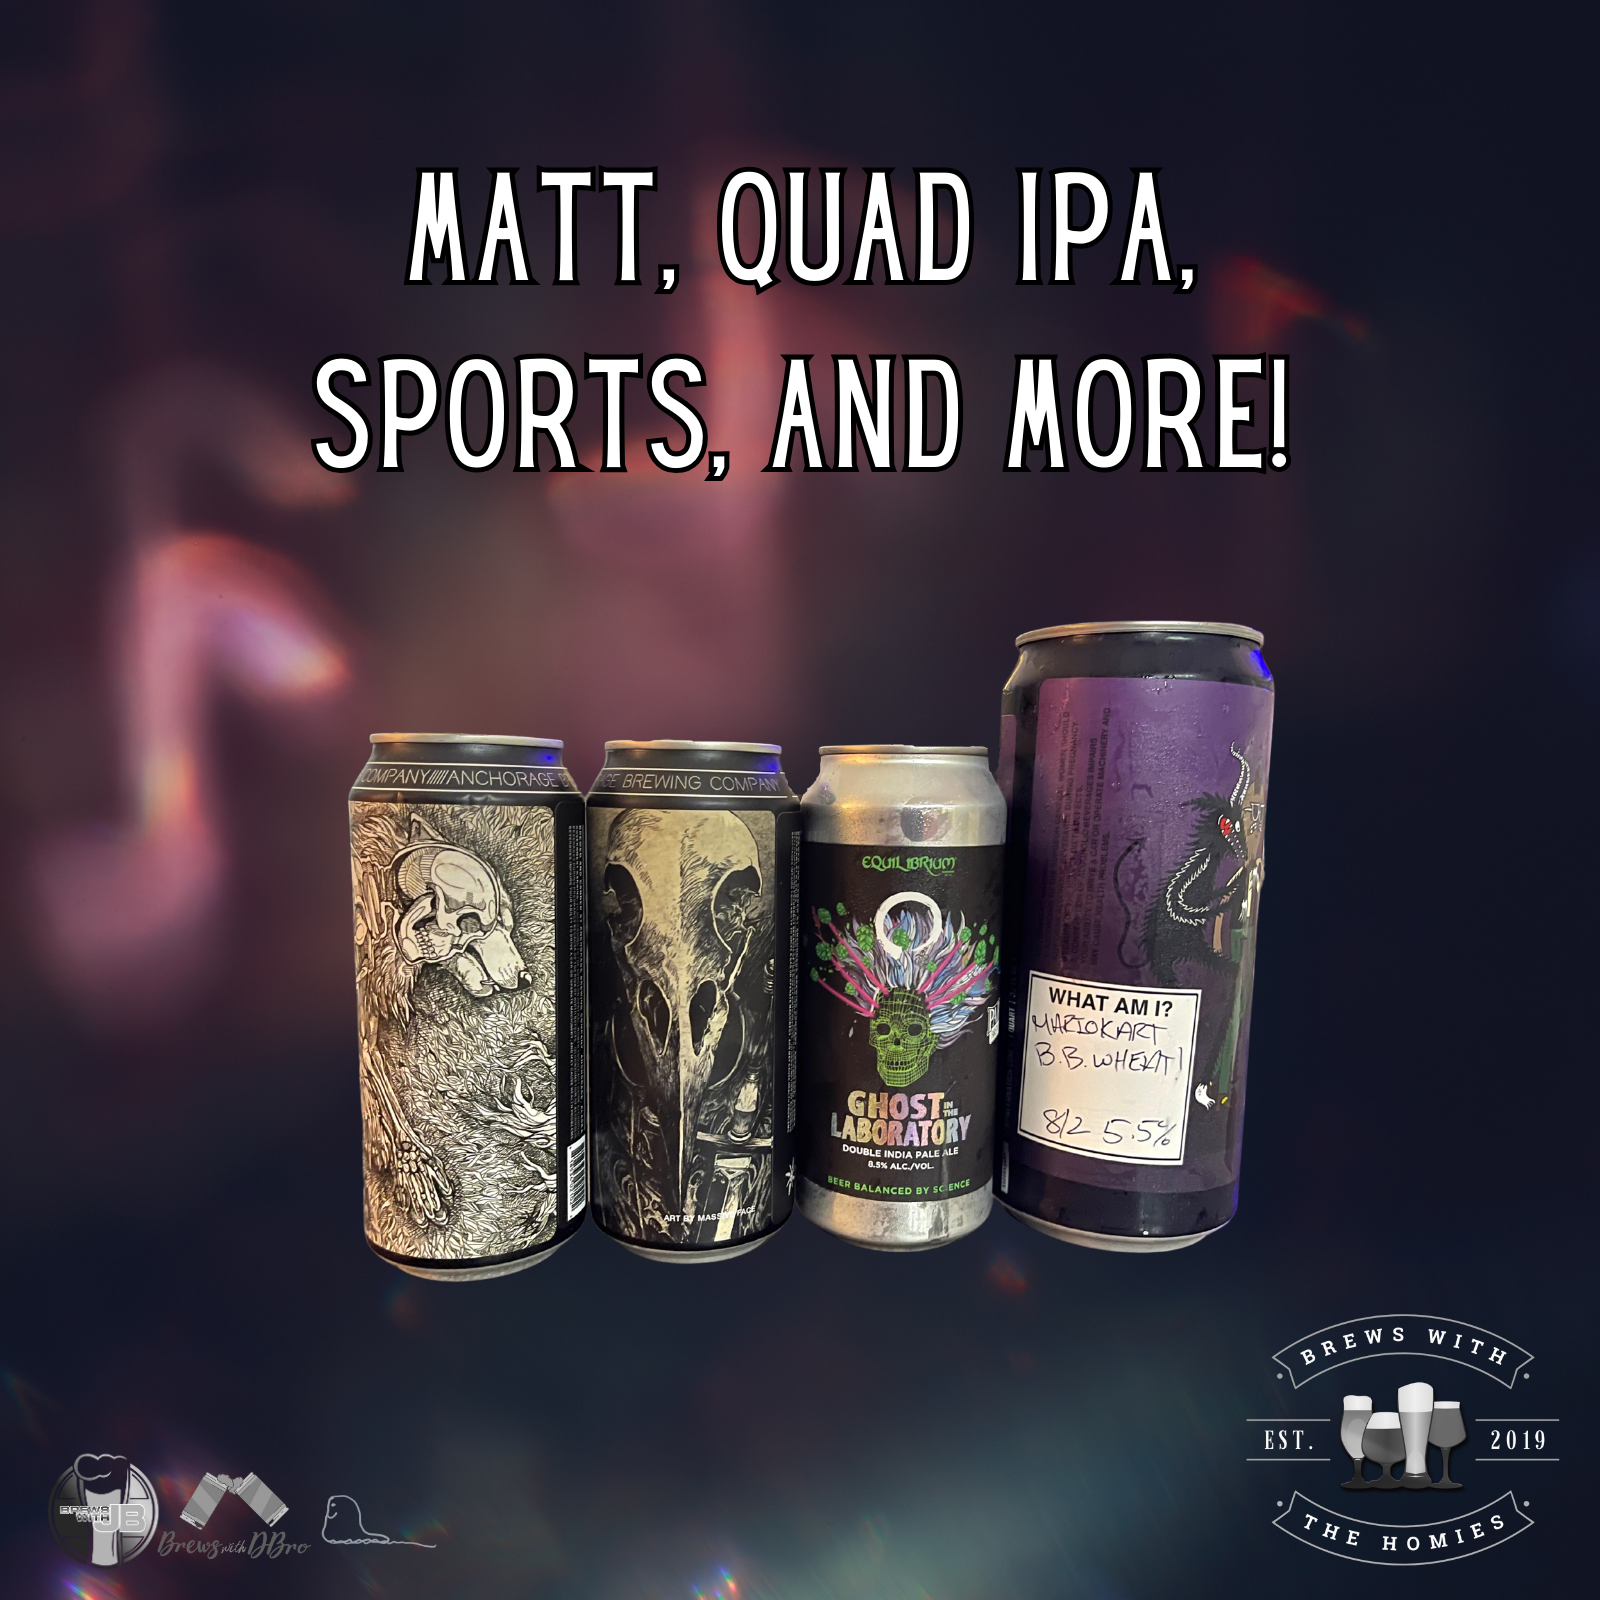 Matt, quad IPA, sports, and more!